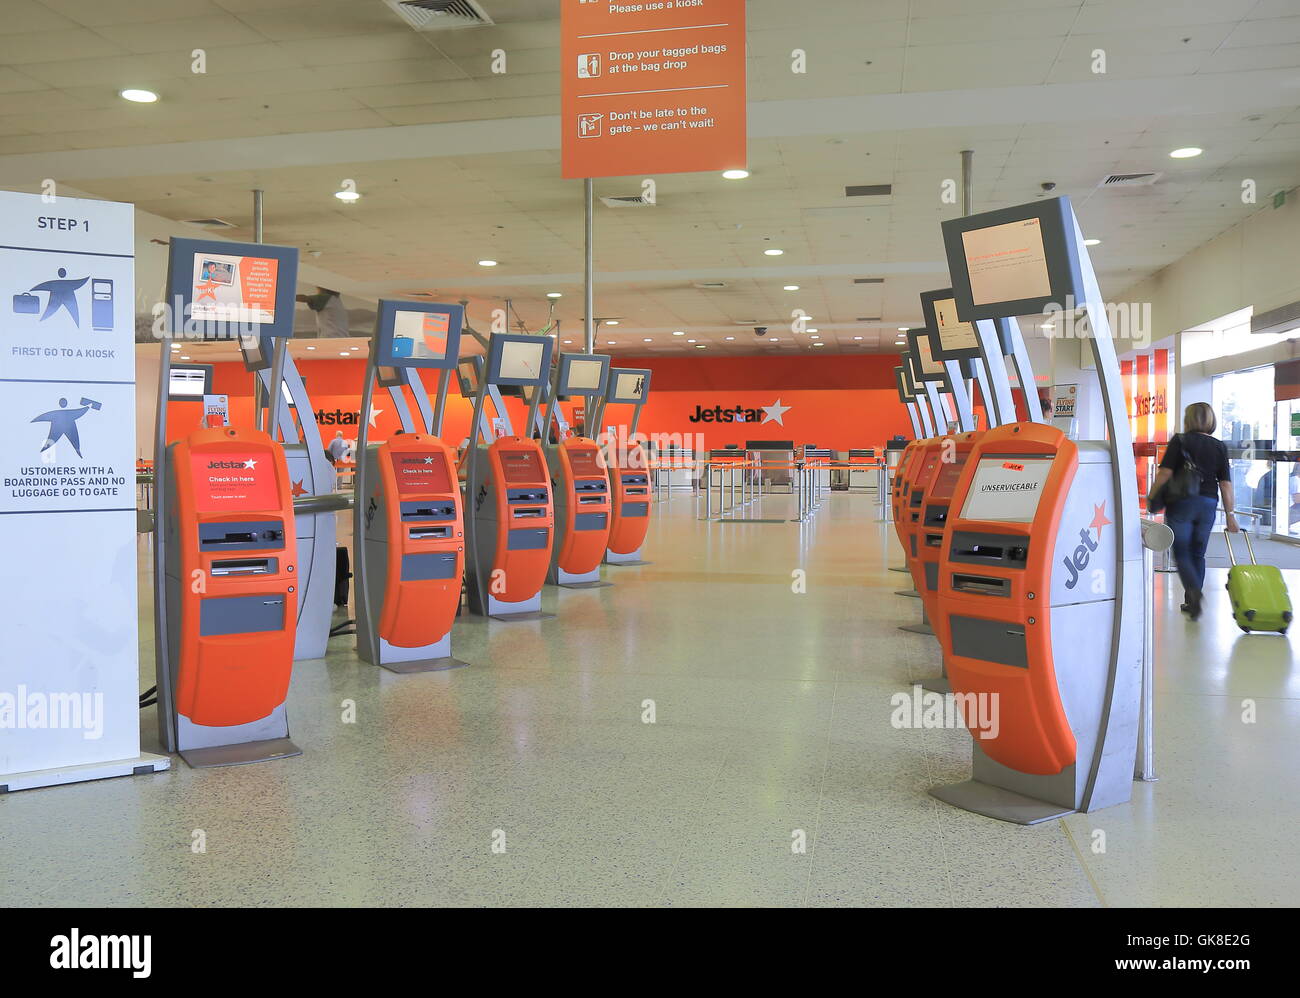 Jetstar self-check in machine at Melbourne Airport in Melbourne Australia. Stock Photo